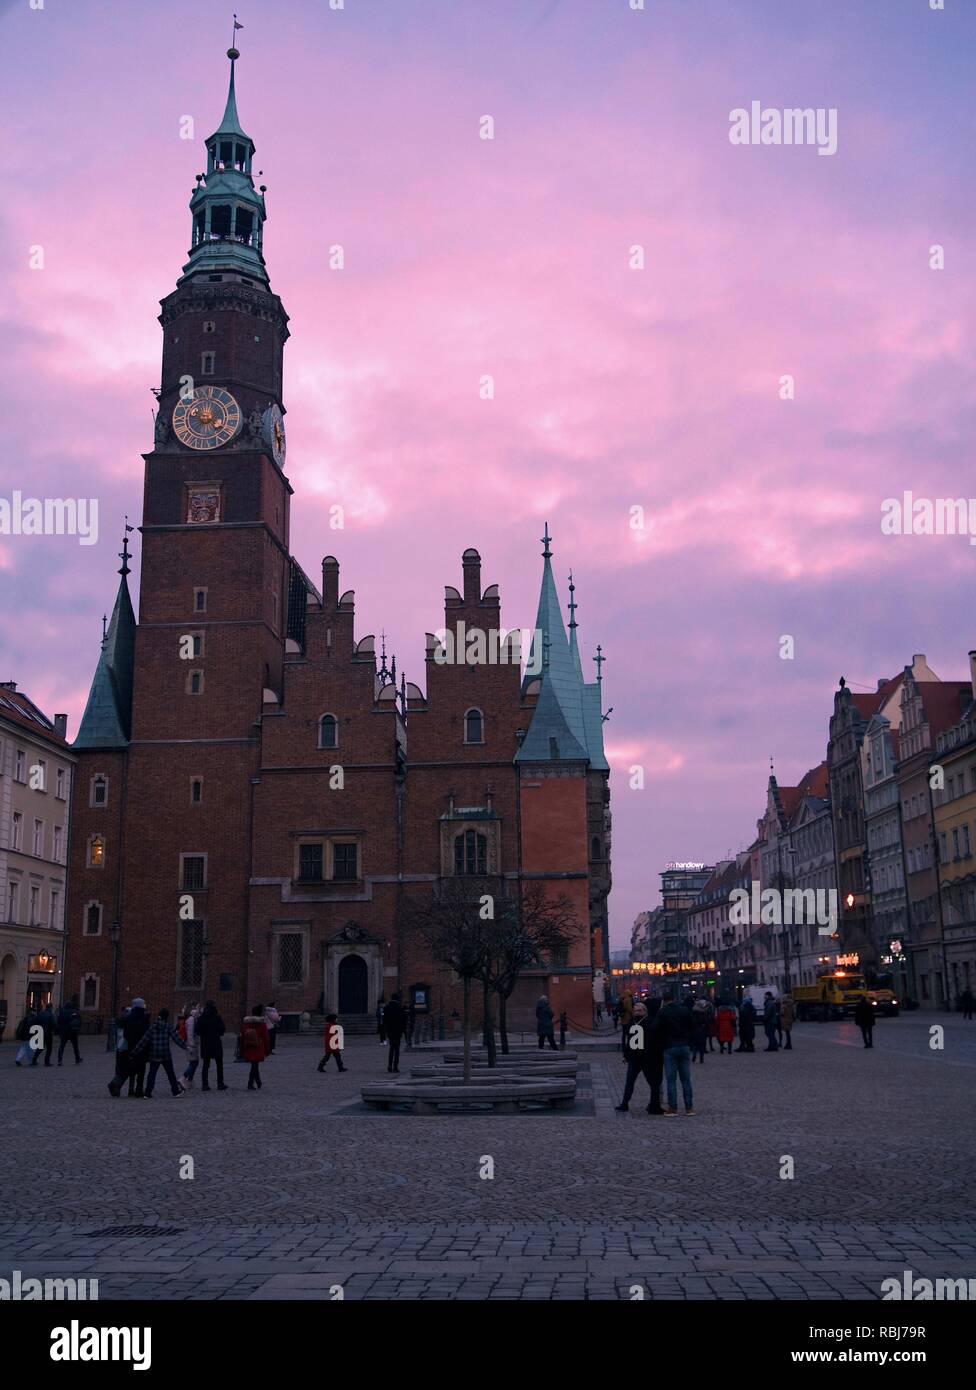 Market Square or Rynek, St. Elizabeth Church at Dusk with Pink Sky Stock Photo